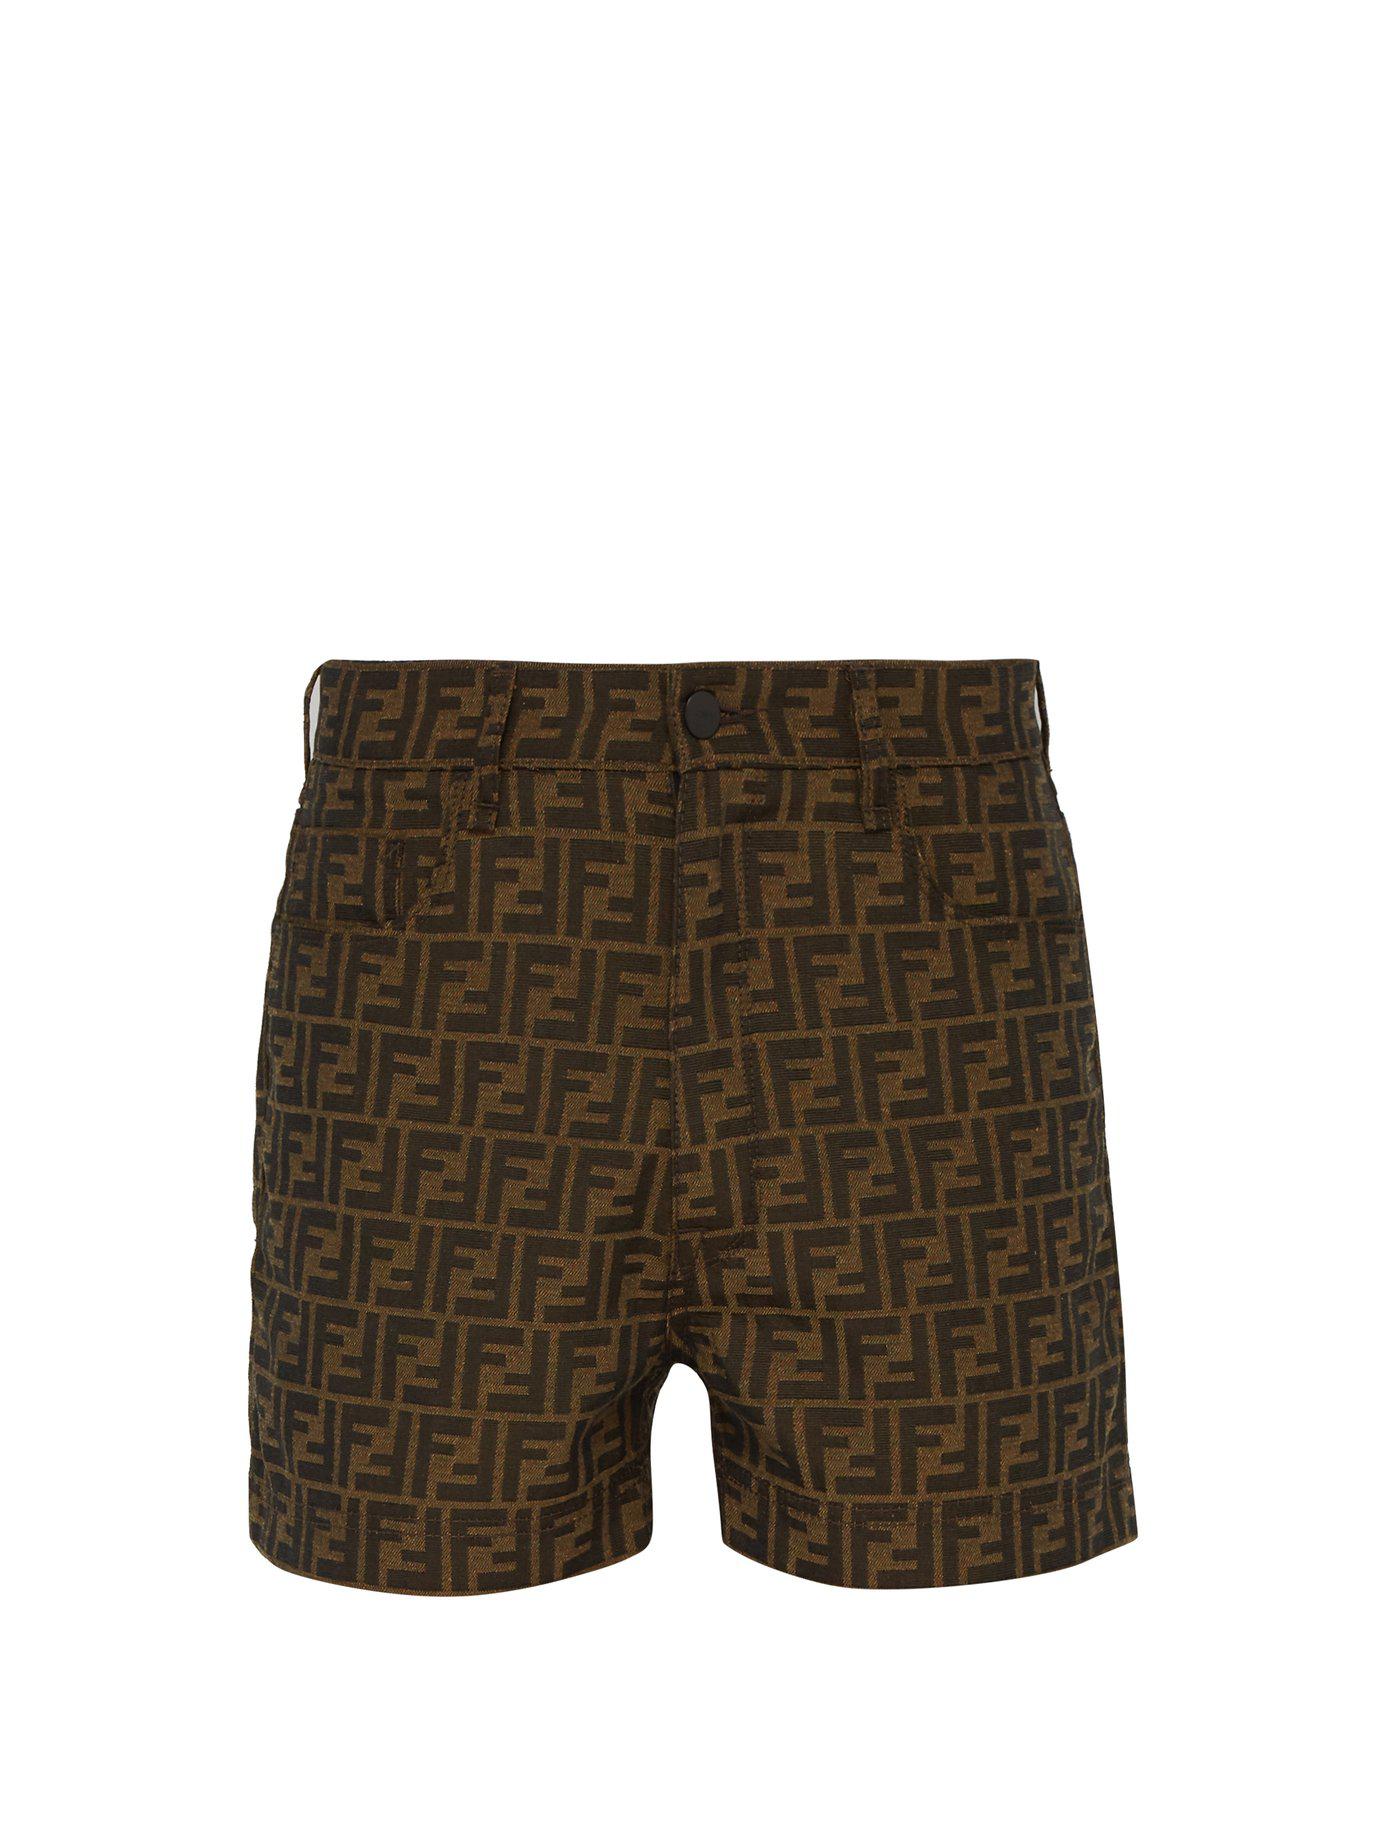 Fendi Rubber Ff Jacquard Shorts for Men - Lyst